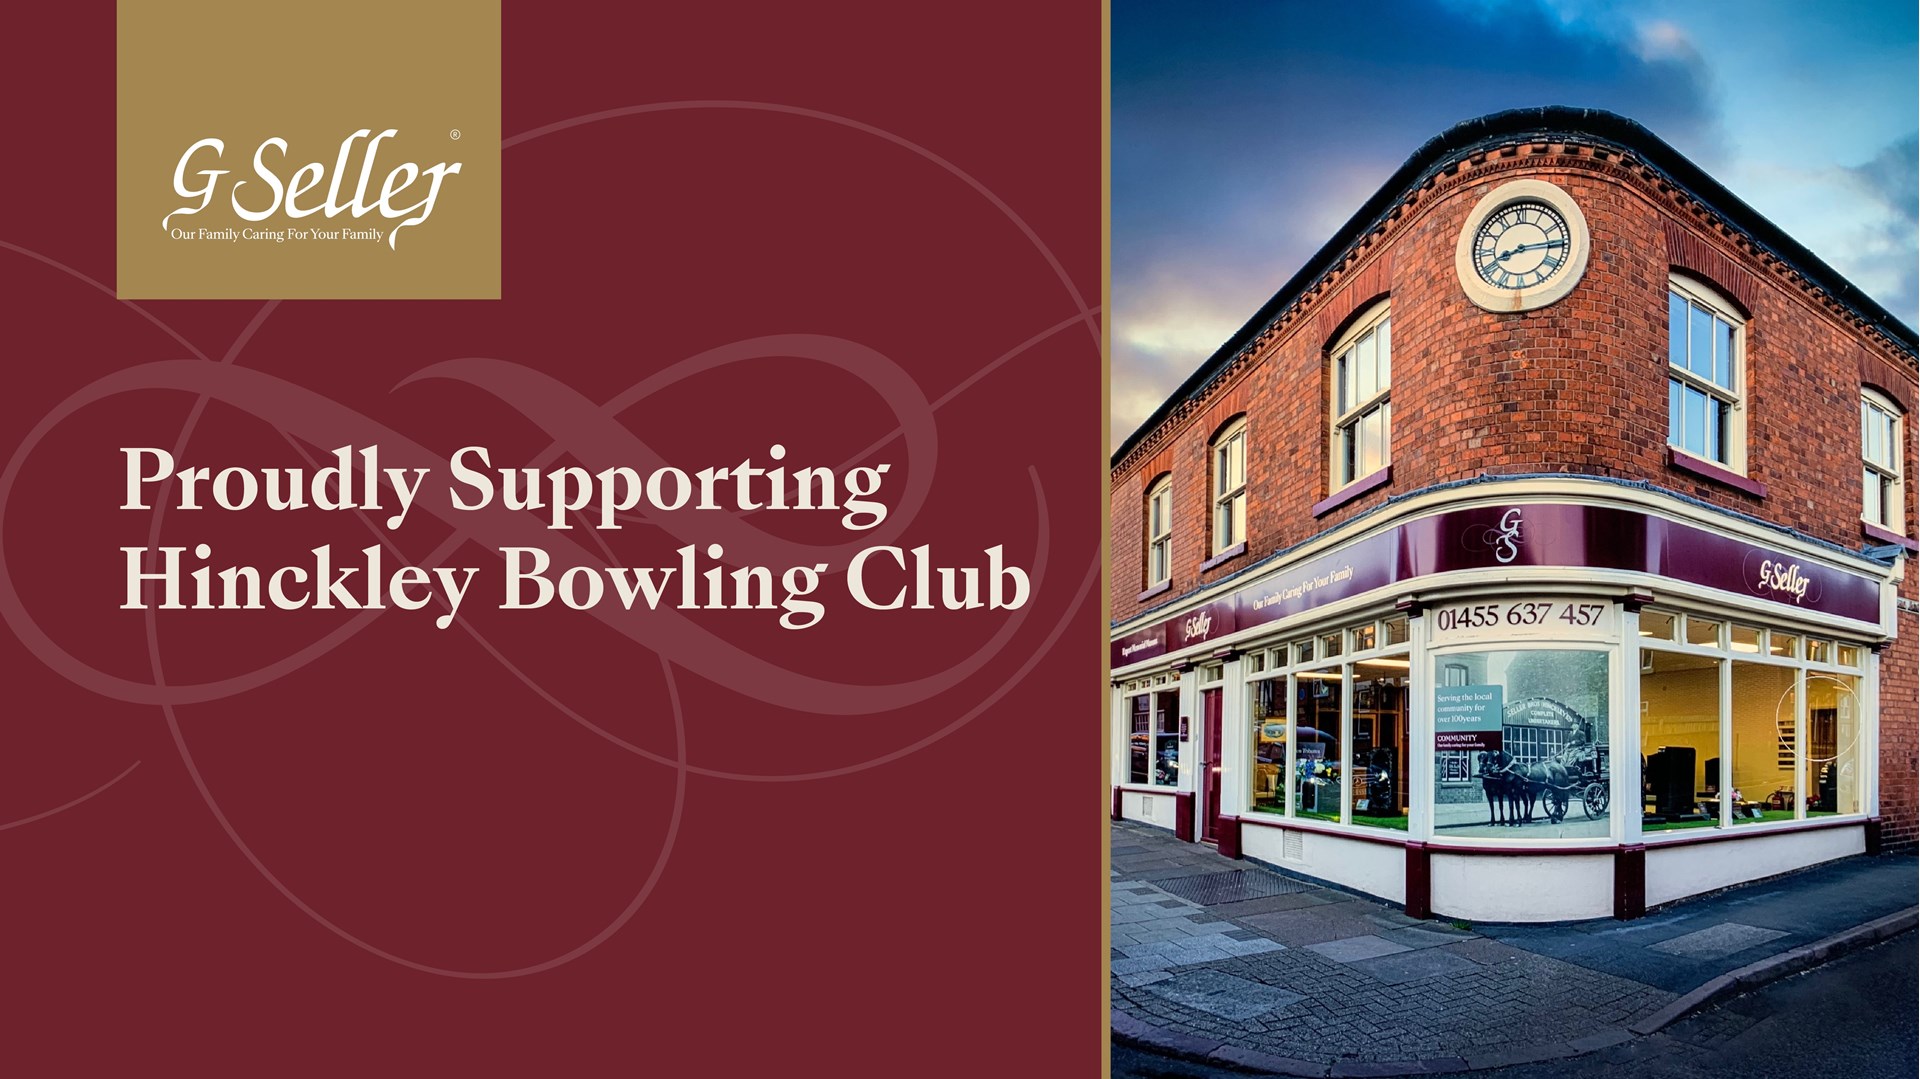 Hinckley Bowling Club Sponsors